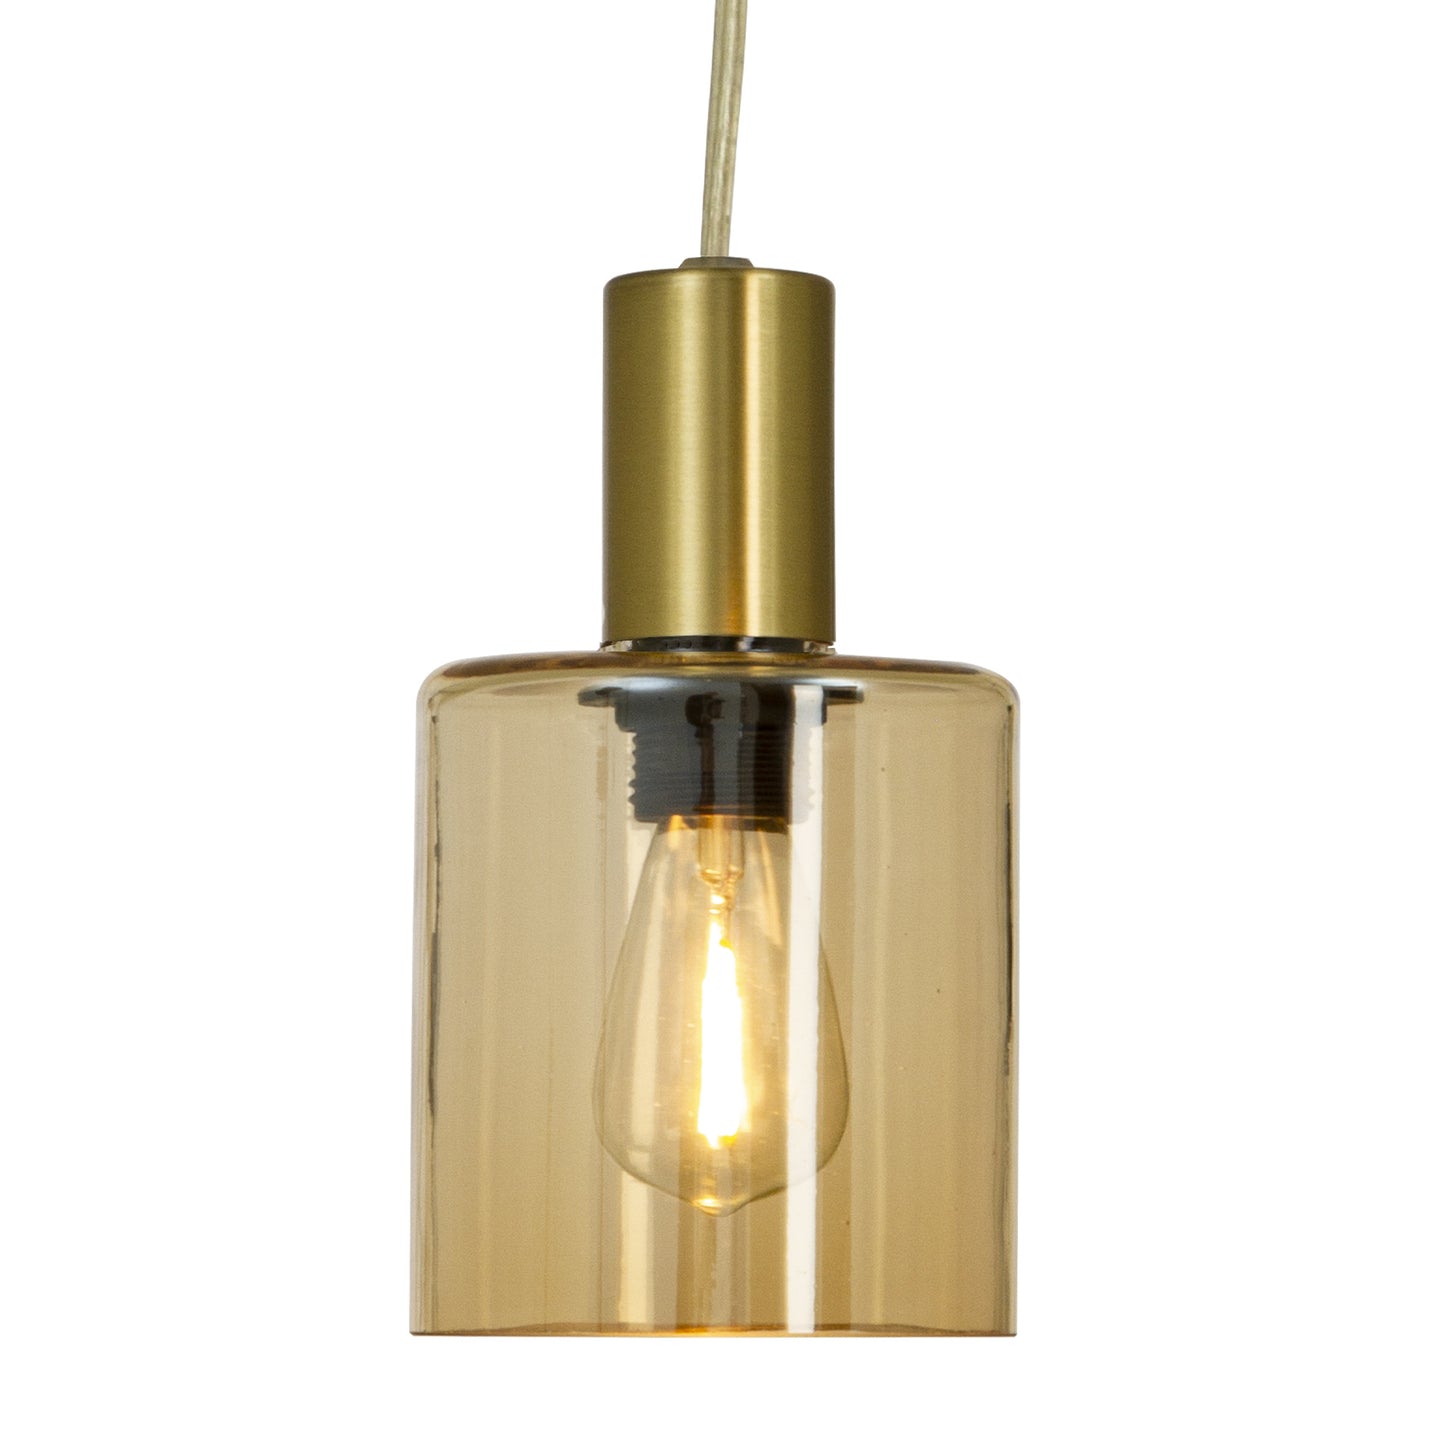 Lysende Cylinder vinduspendel laget i messing og amber glass med lang ledning, bryter og hullbrikke - Aneta belysning